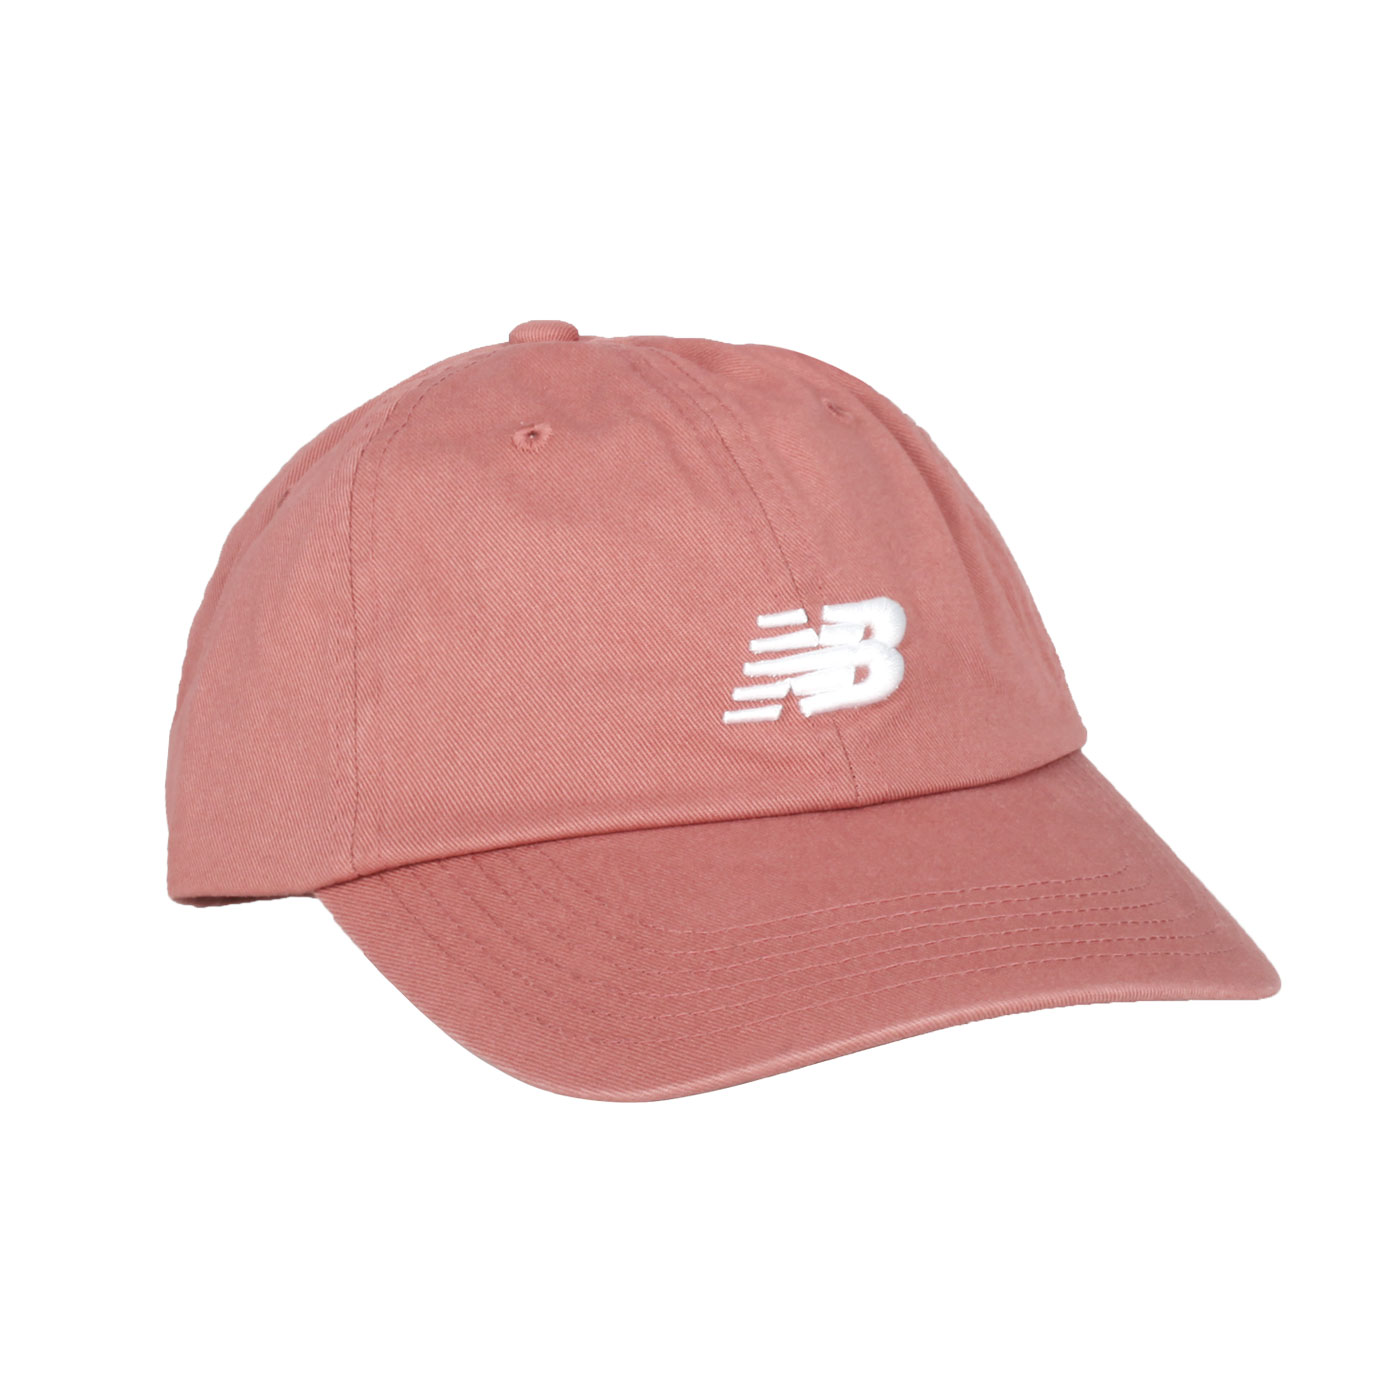 NEW BALANCE 復古棒球帽 LAH91014MIN - 珊瑚粉白